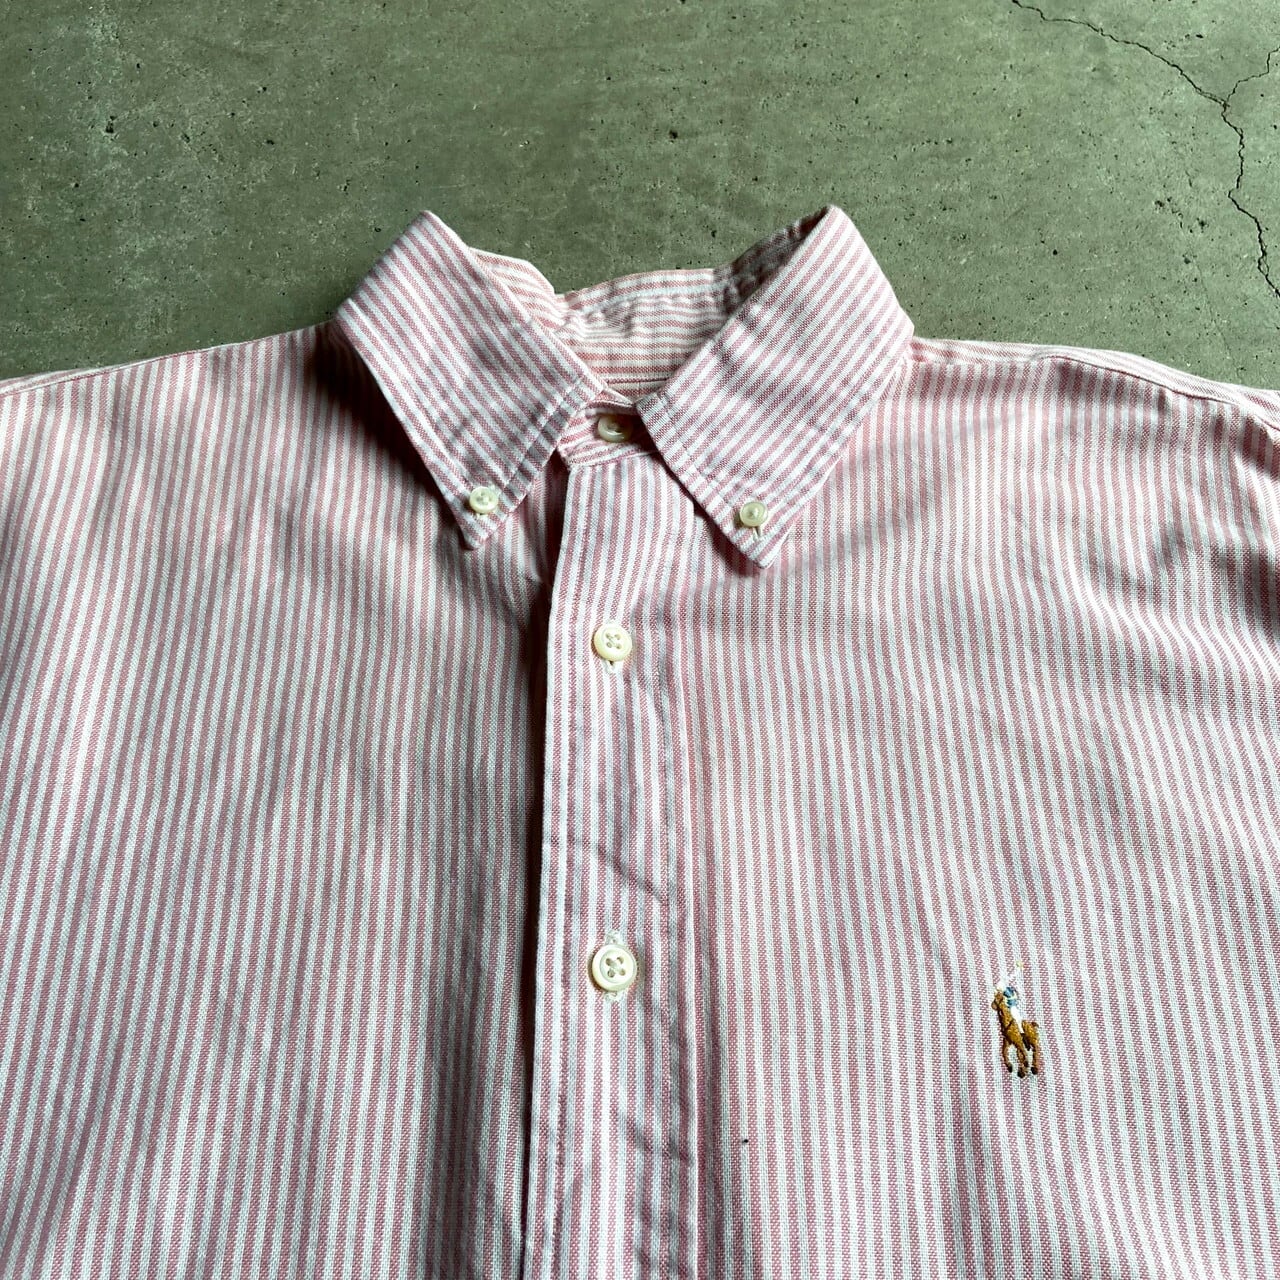 〜90s　vintage　USA製　細ストライプ柄　BDシャツ　ピンク×ホワイト